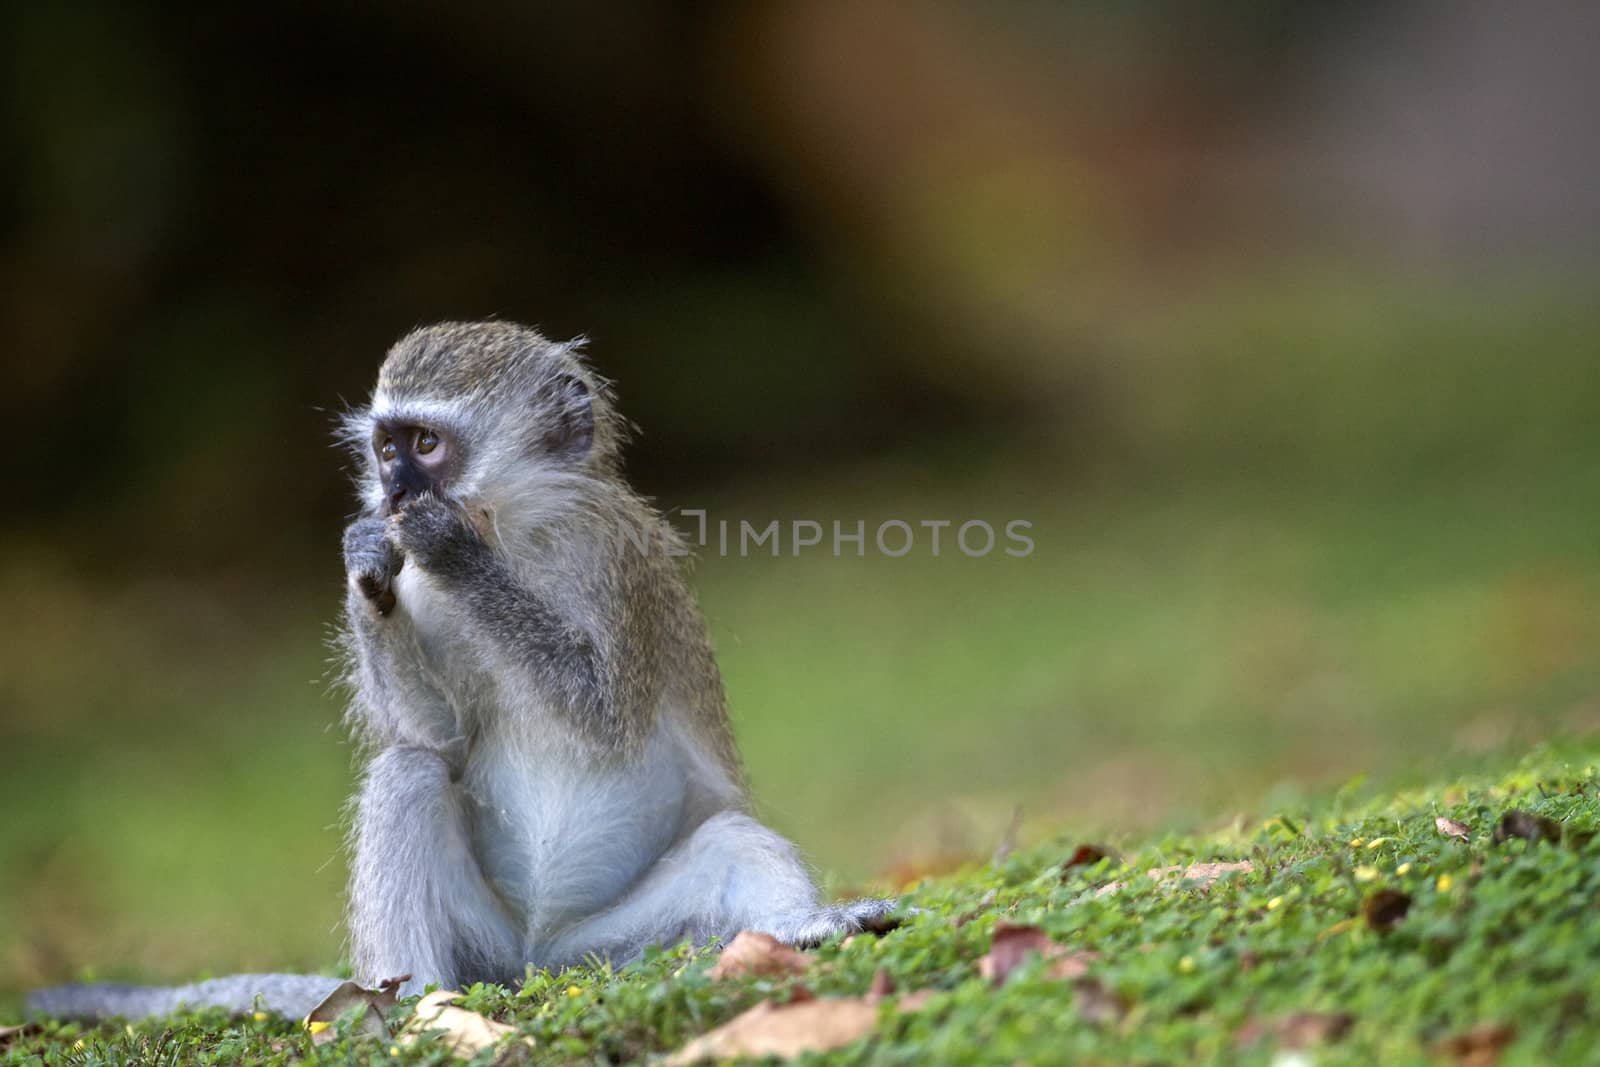 Vervet monkey sitting on the grass